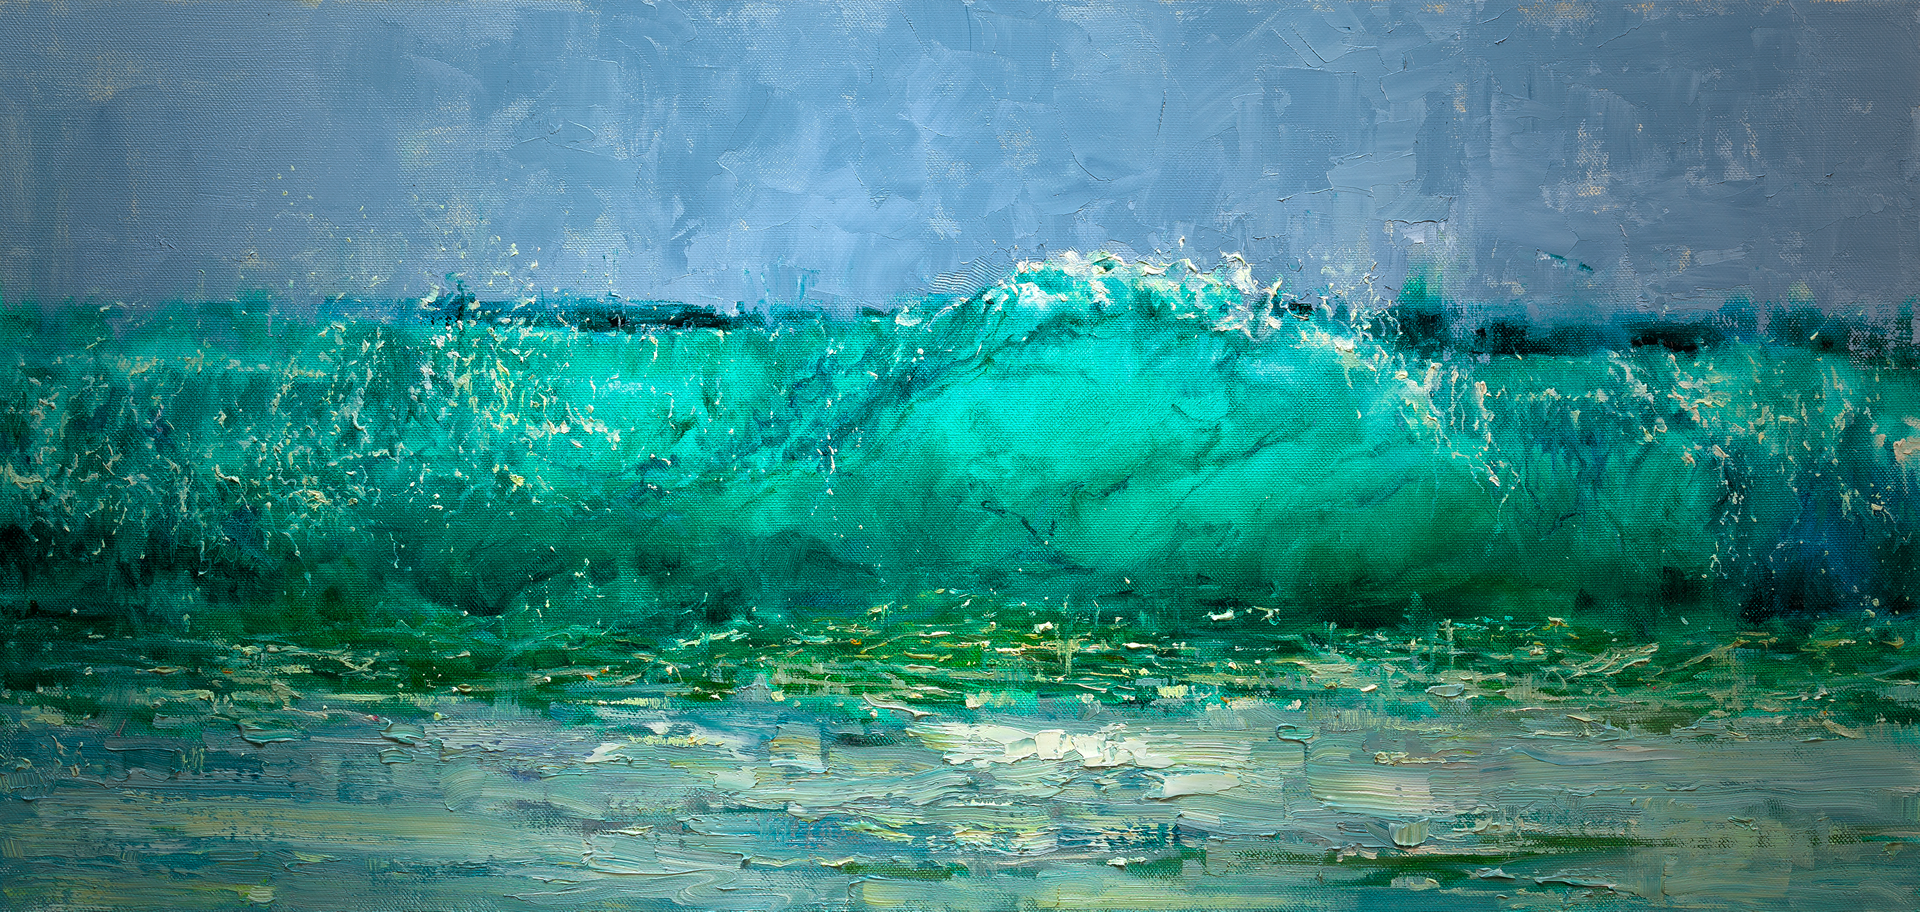 "Emerald Wave" by Oleg Trofimov